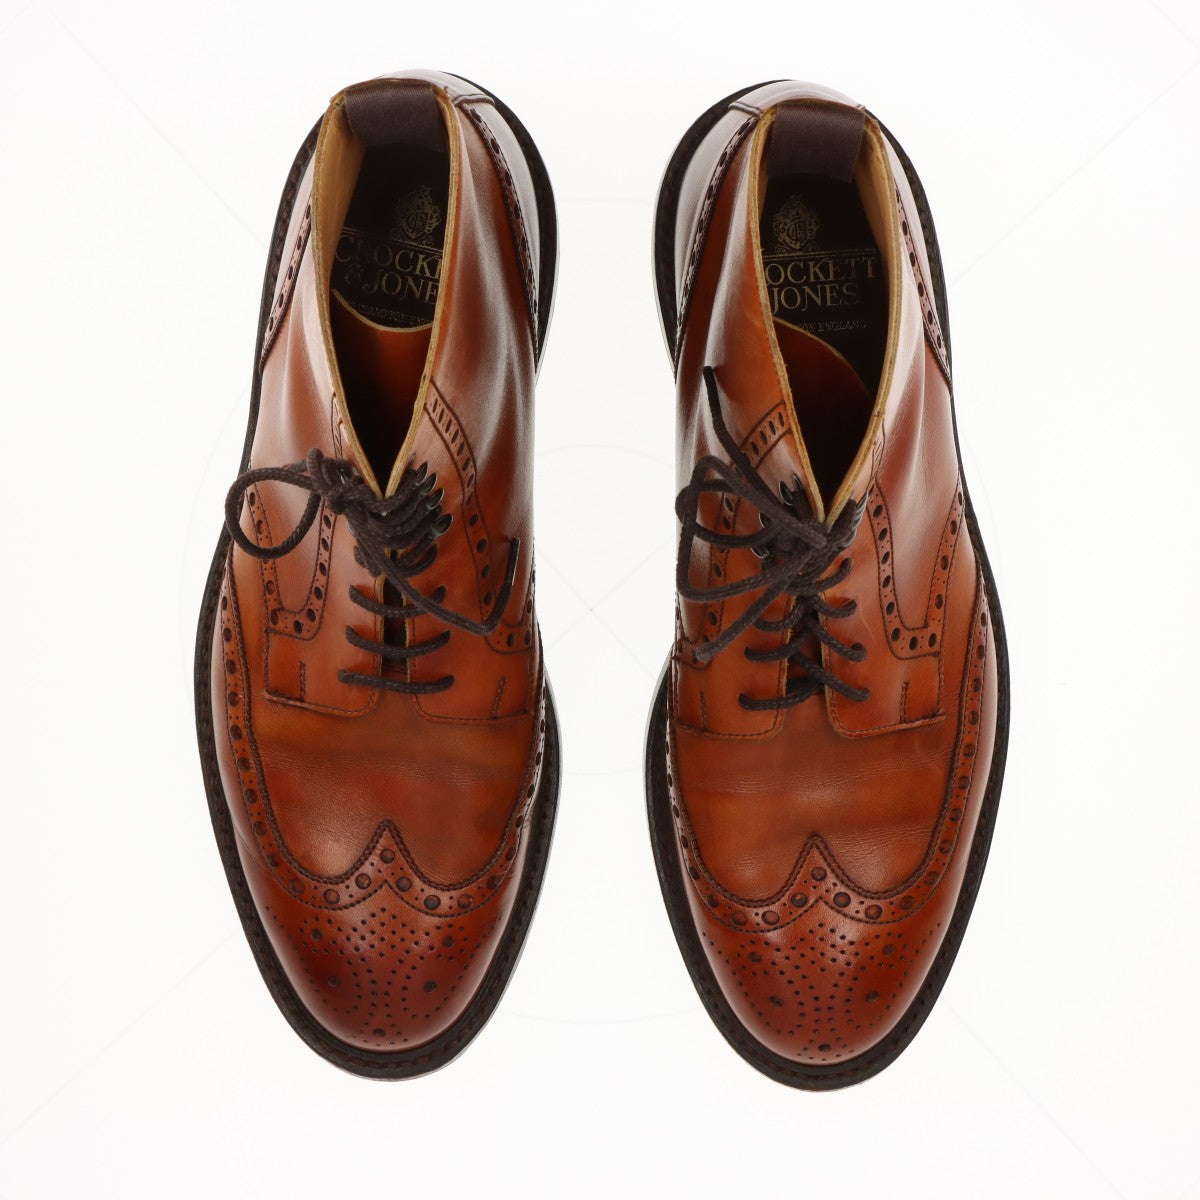 et & Jones Leather Short Boots 7E Mens Brown 6078 SKYE3